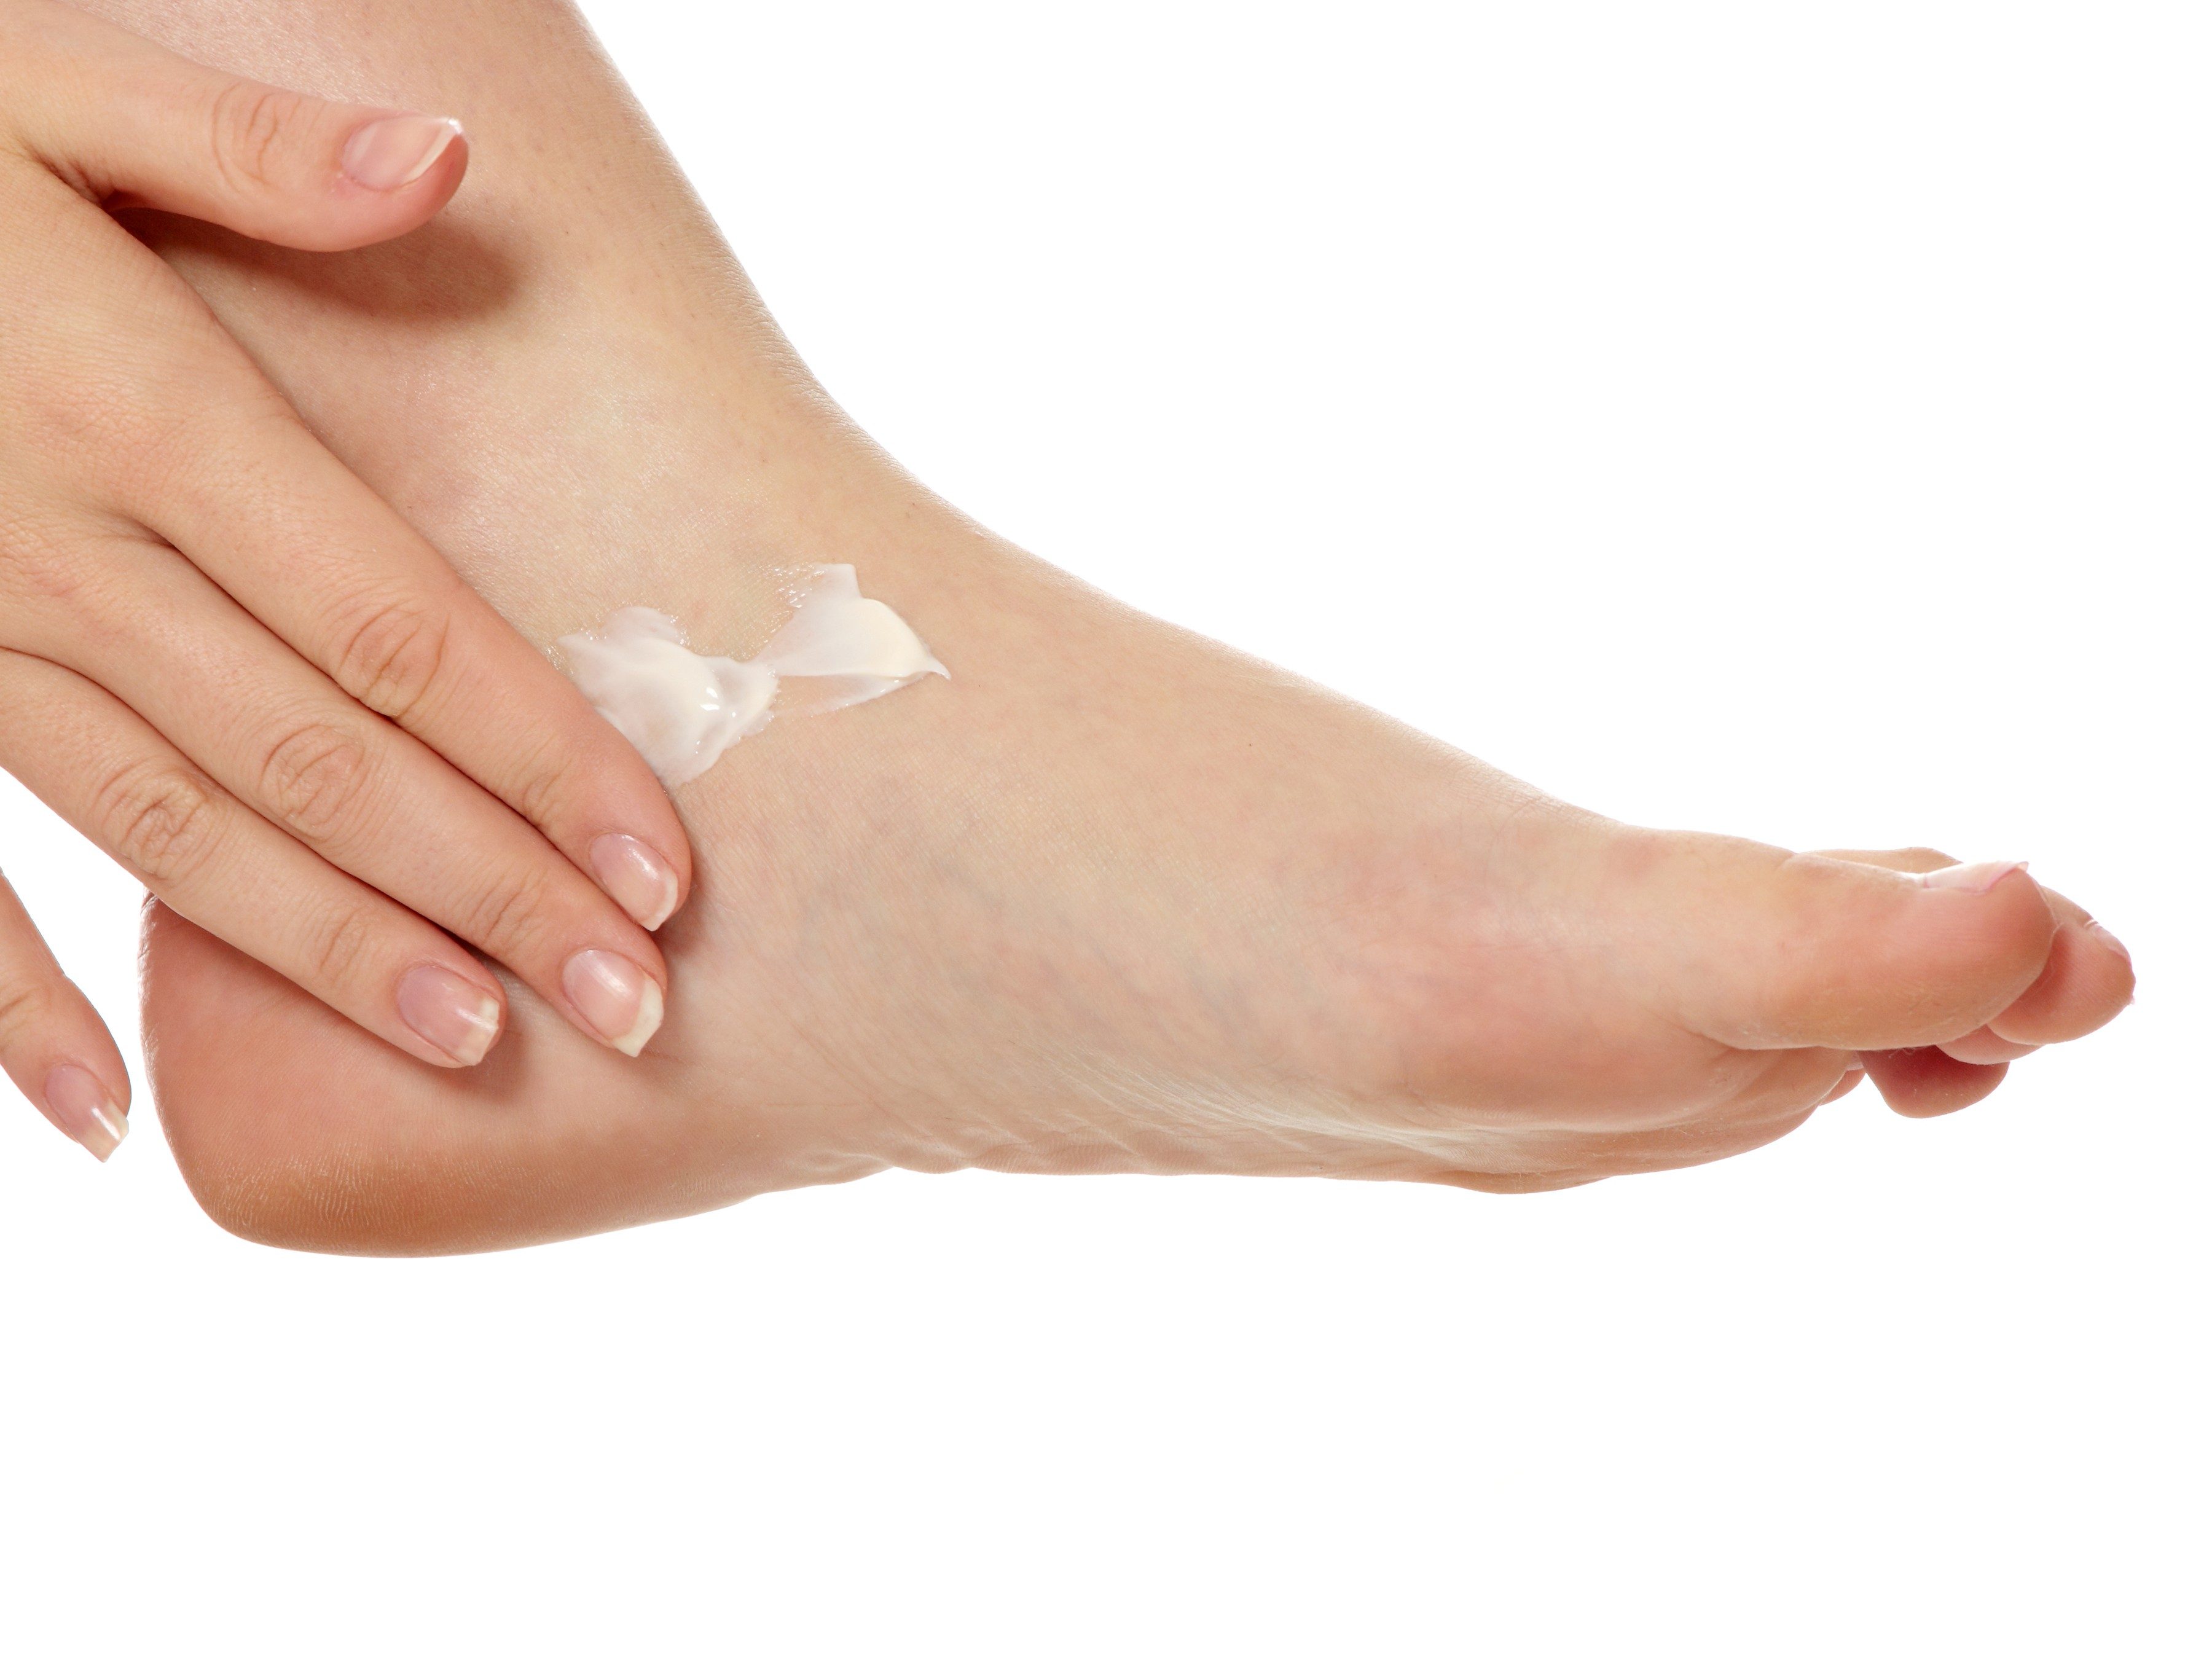 hydrocortisone cream for cracked feet